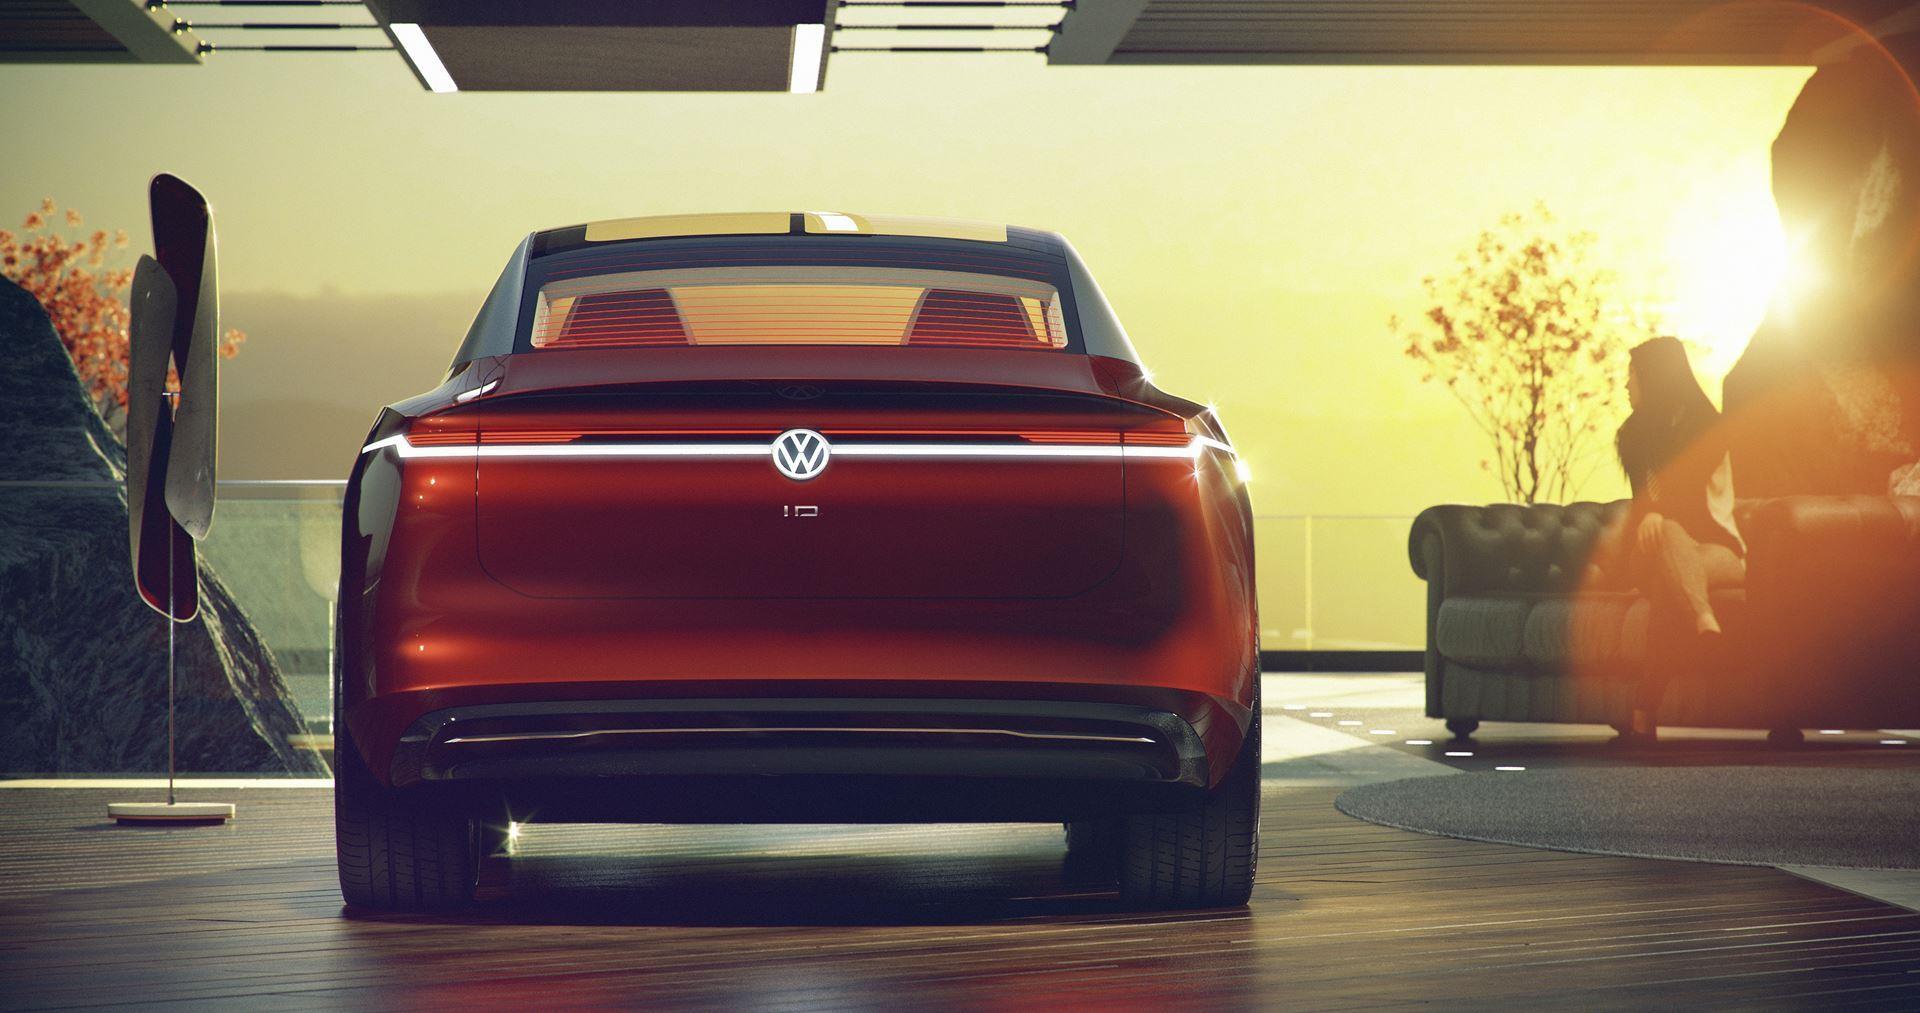 2018 Volkswagen I.D. VIZZION Concept